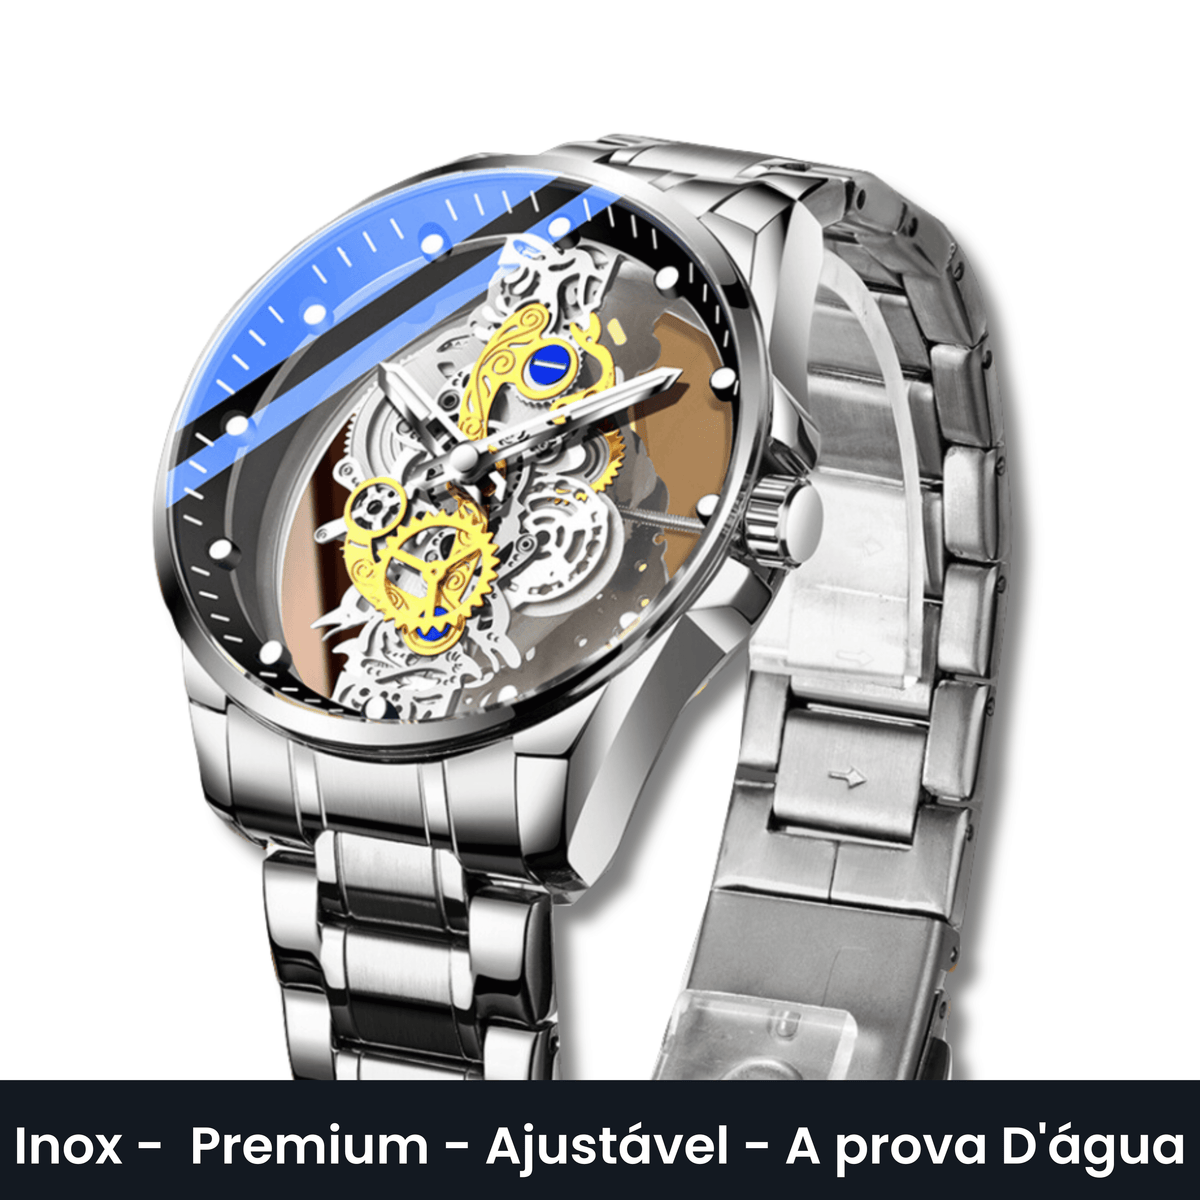 Relógio Masculino Titanium Elite Protark™